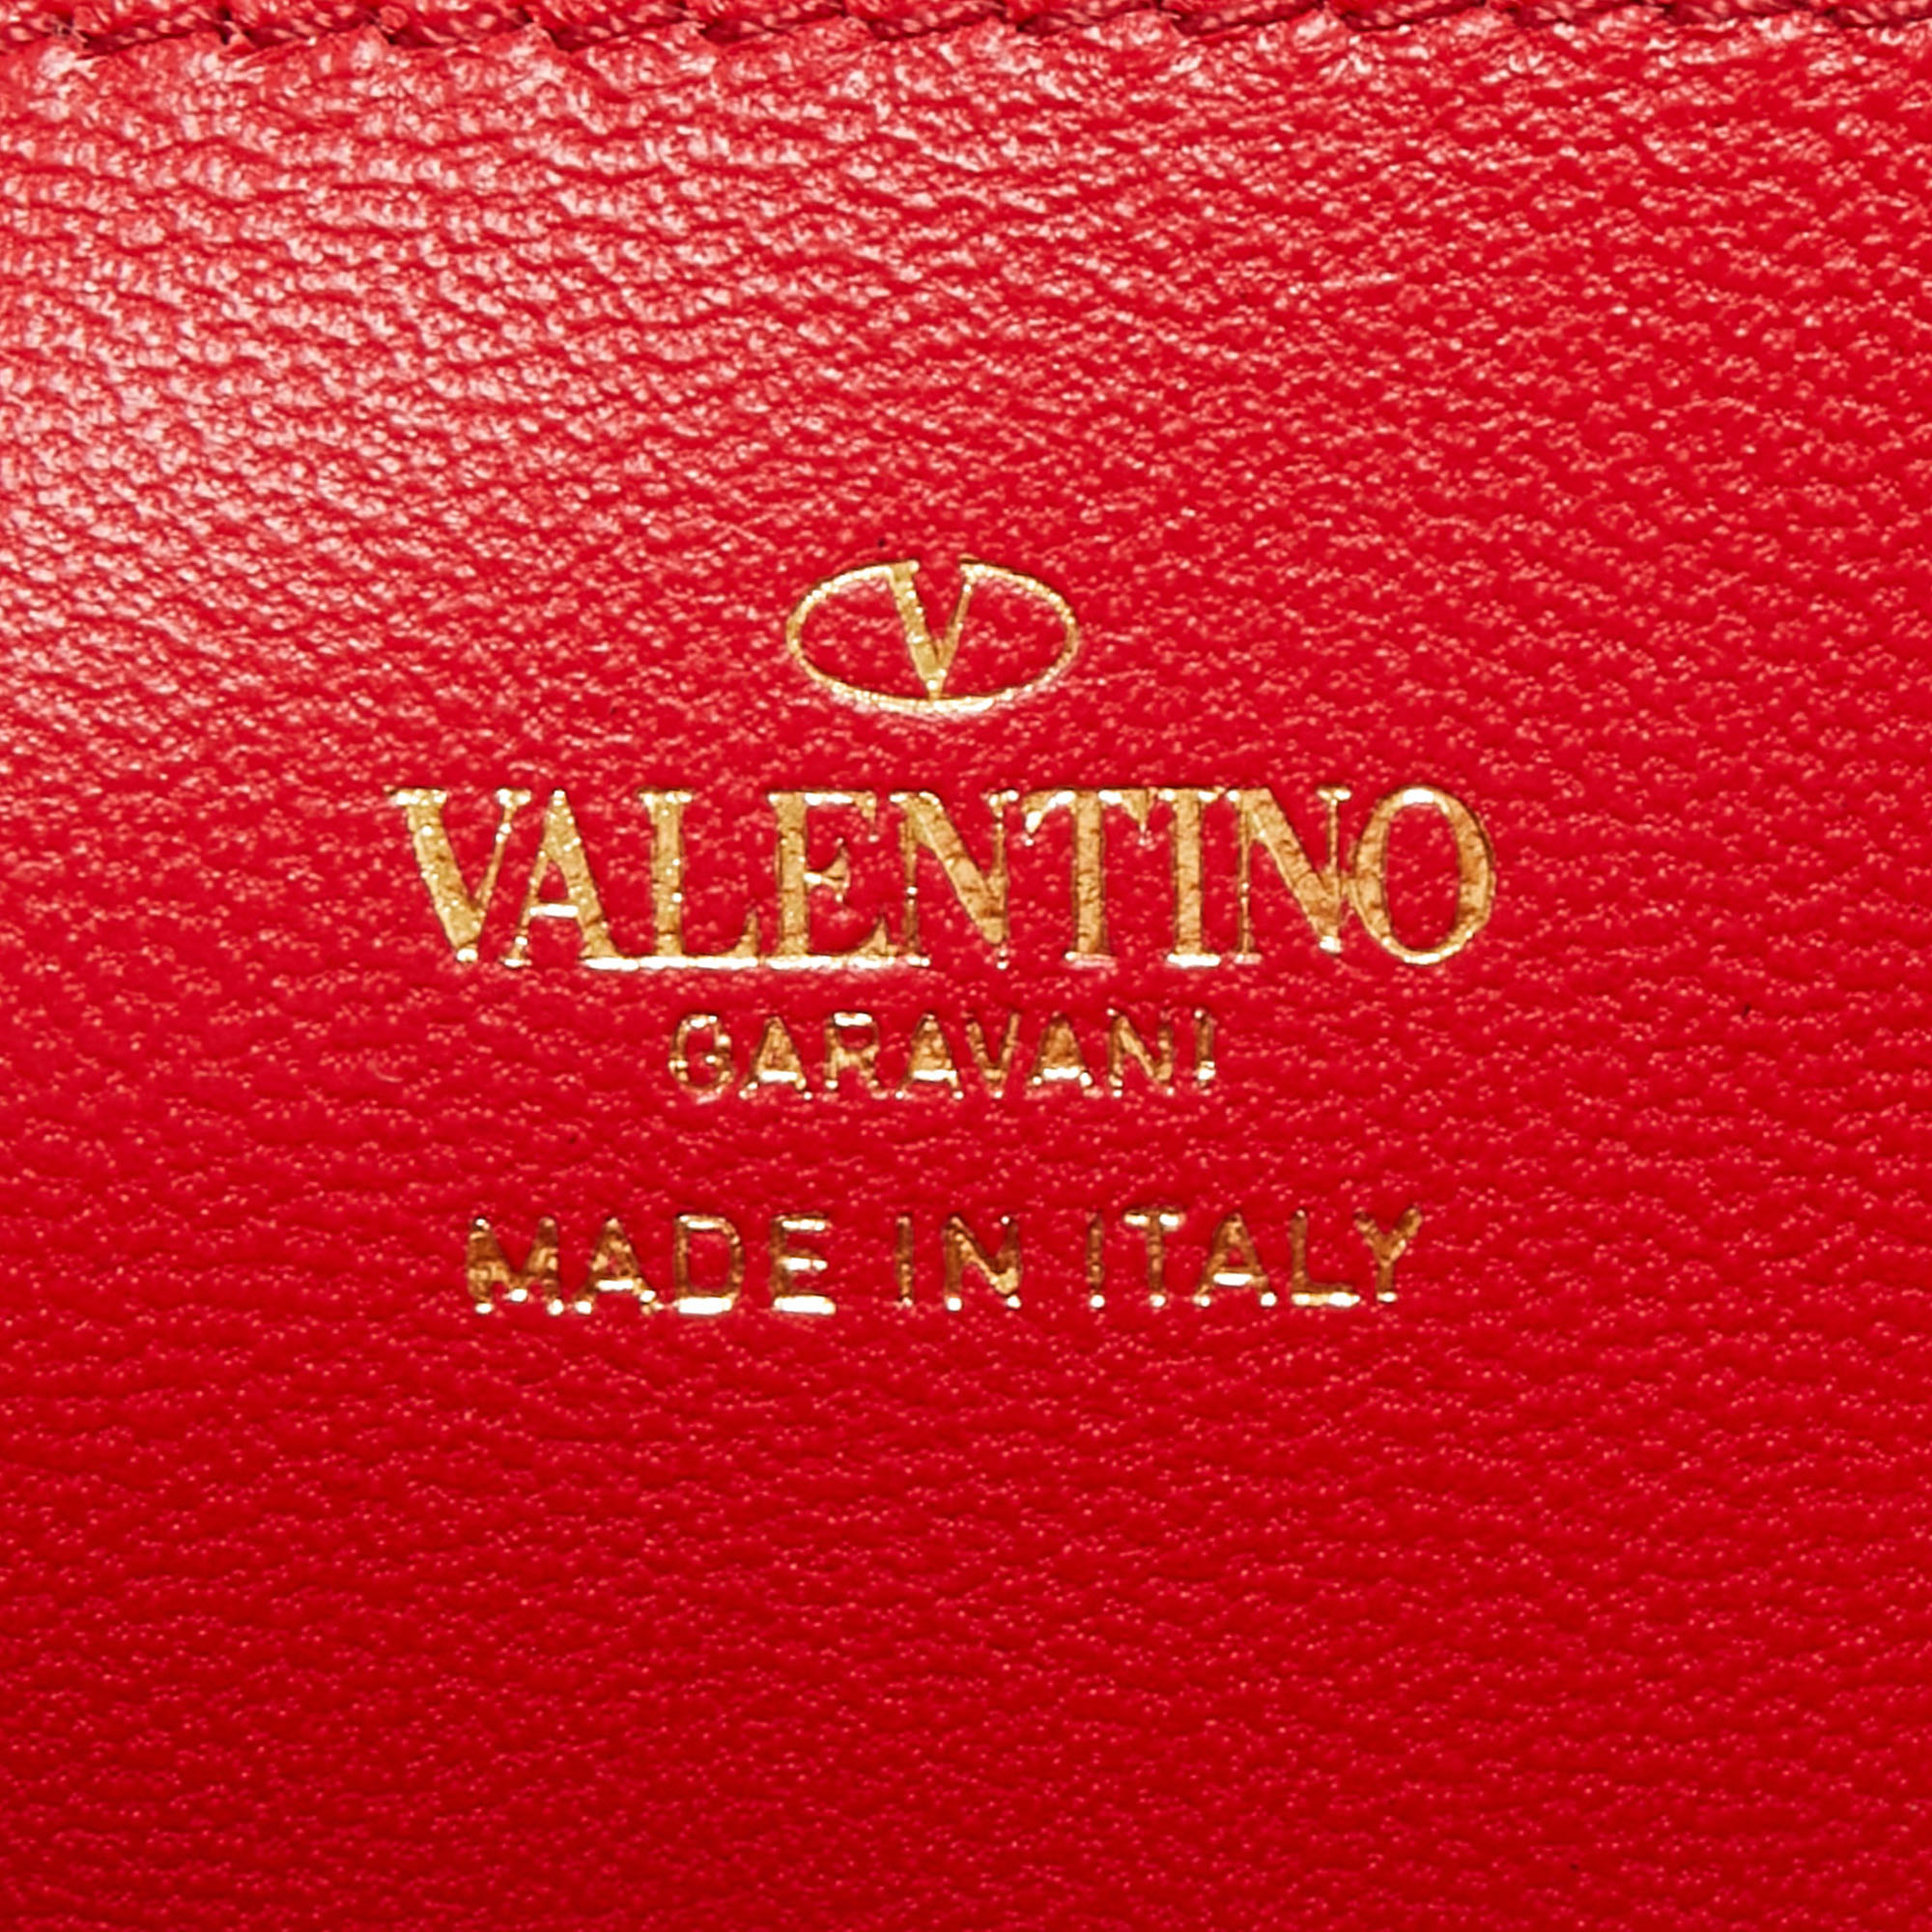 Valentino Black Leather Rockstud Alcove Box Top Handle Bag